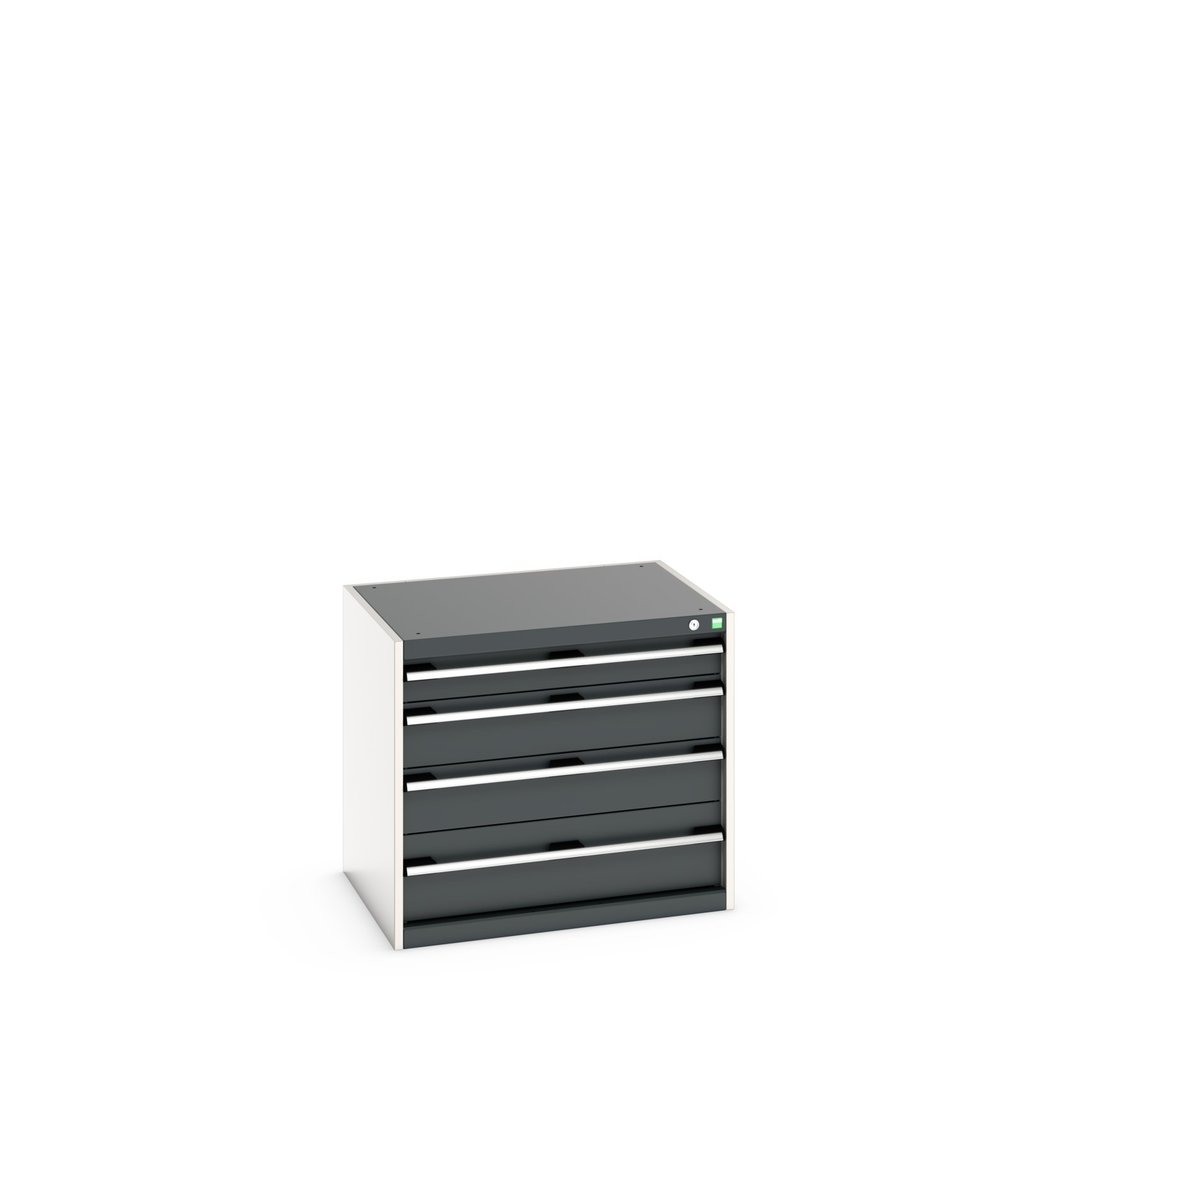 40020015. - cubio drawer cabinet